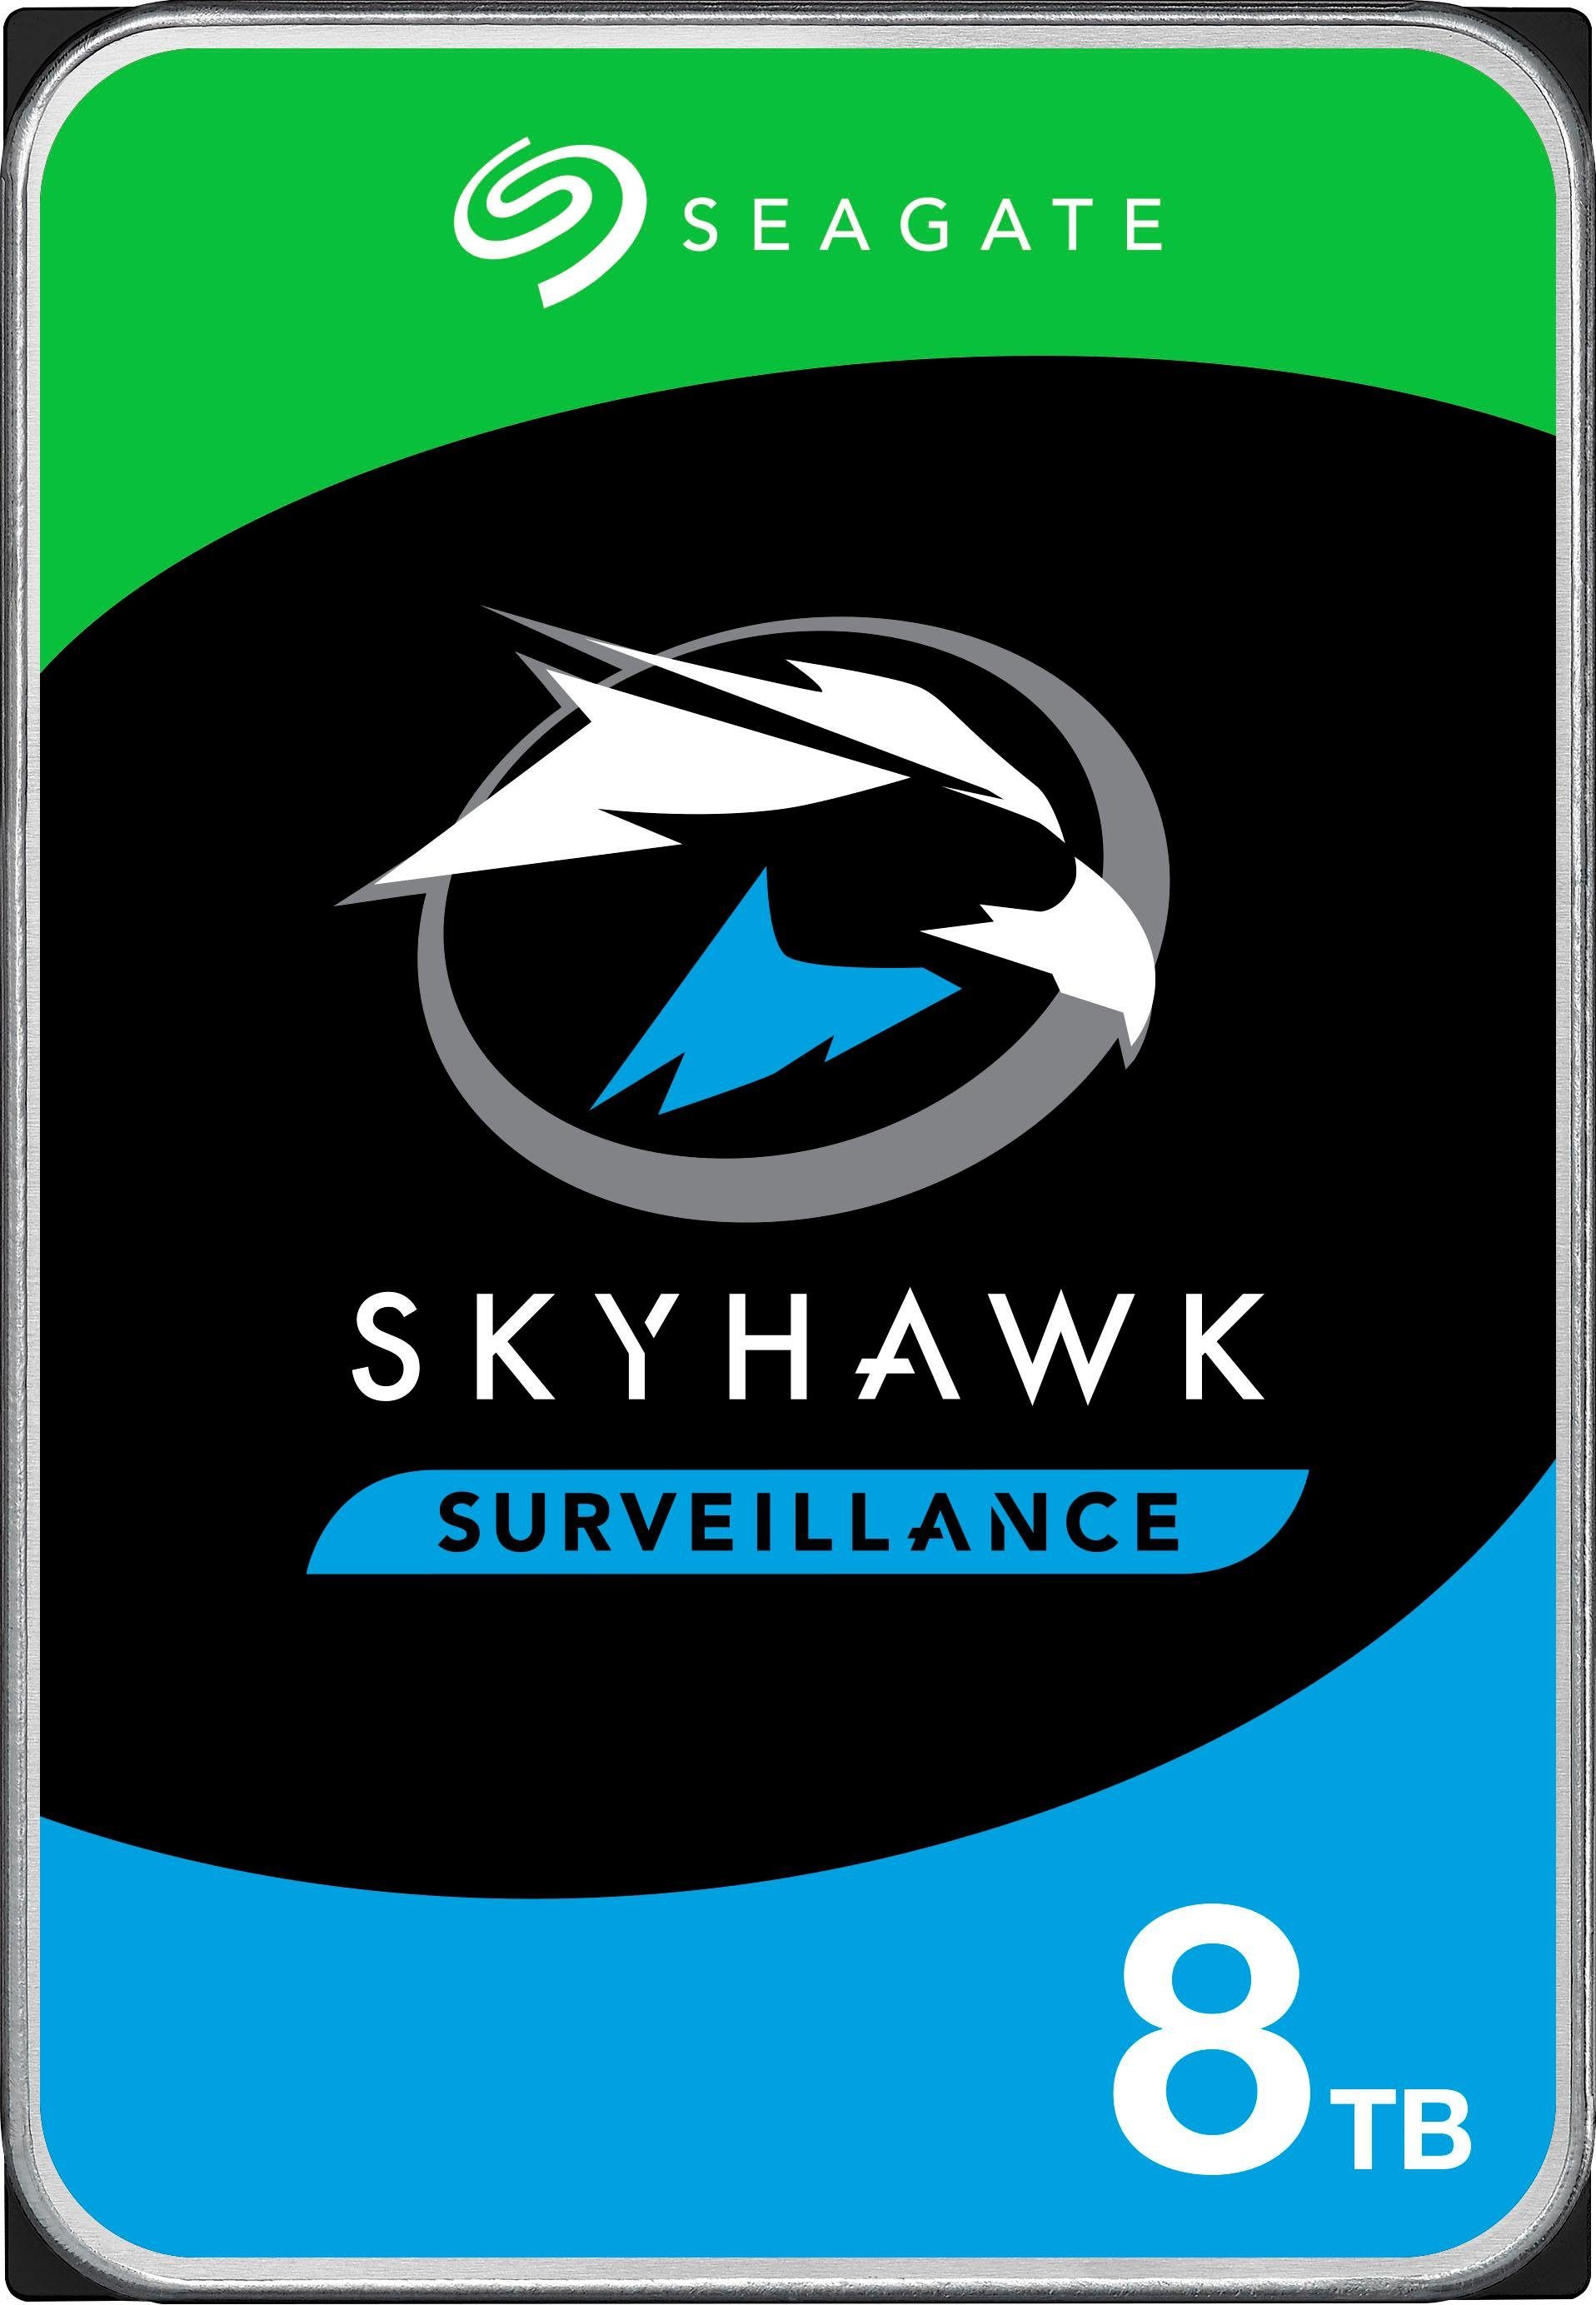 Seagate HDD-Festplatte »SkyHawk«, 3,5 Zoll, Anschluss SATA III, Bulk, inkl. 3 Jahre Rescue Data Recovery Services von Seagate